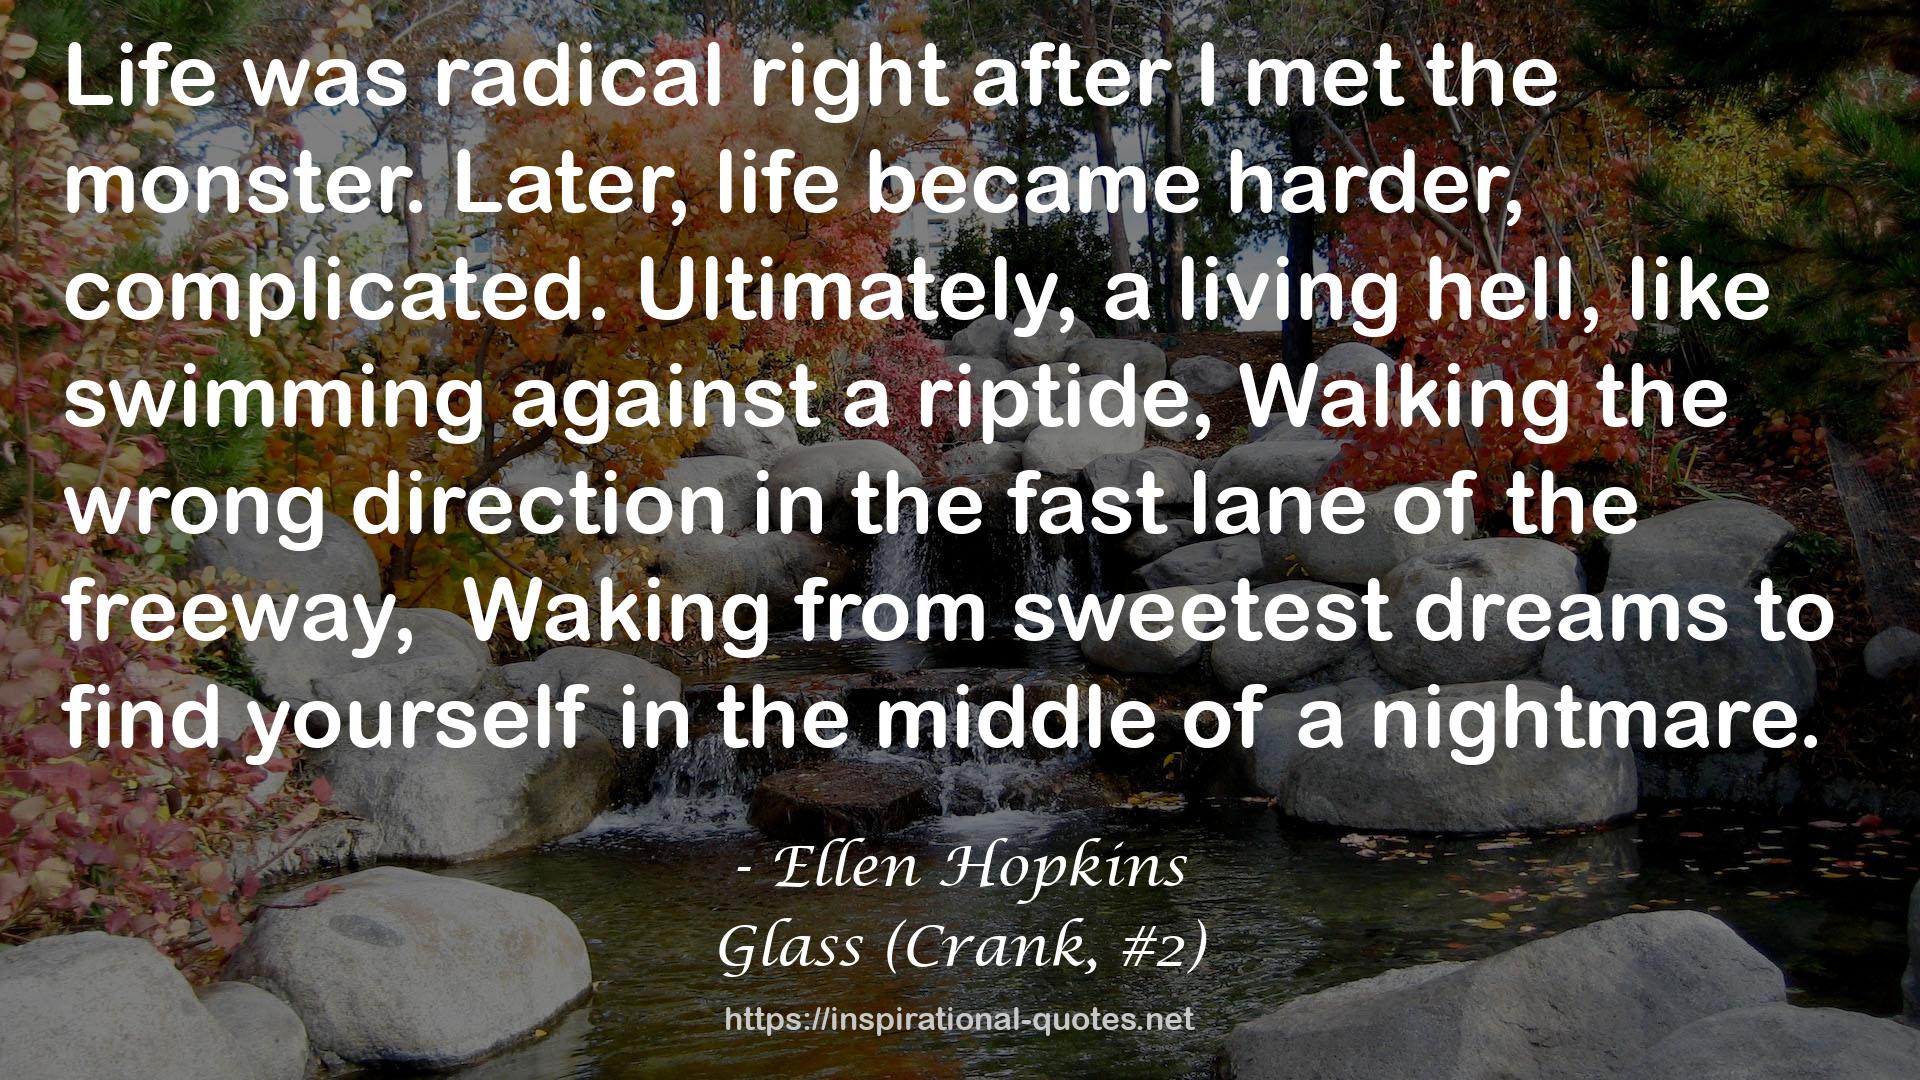 Glass (Crank, #2) QUOTES